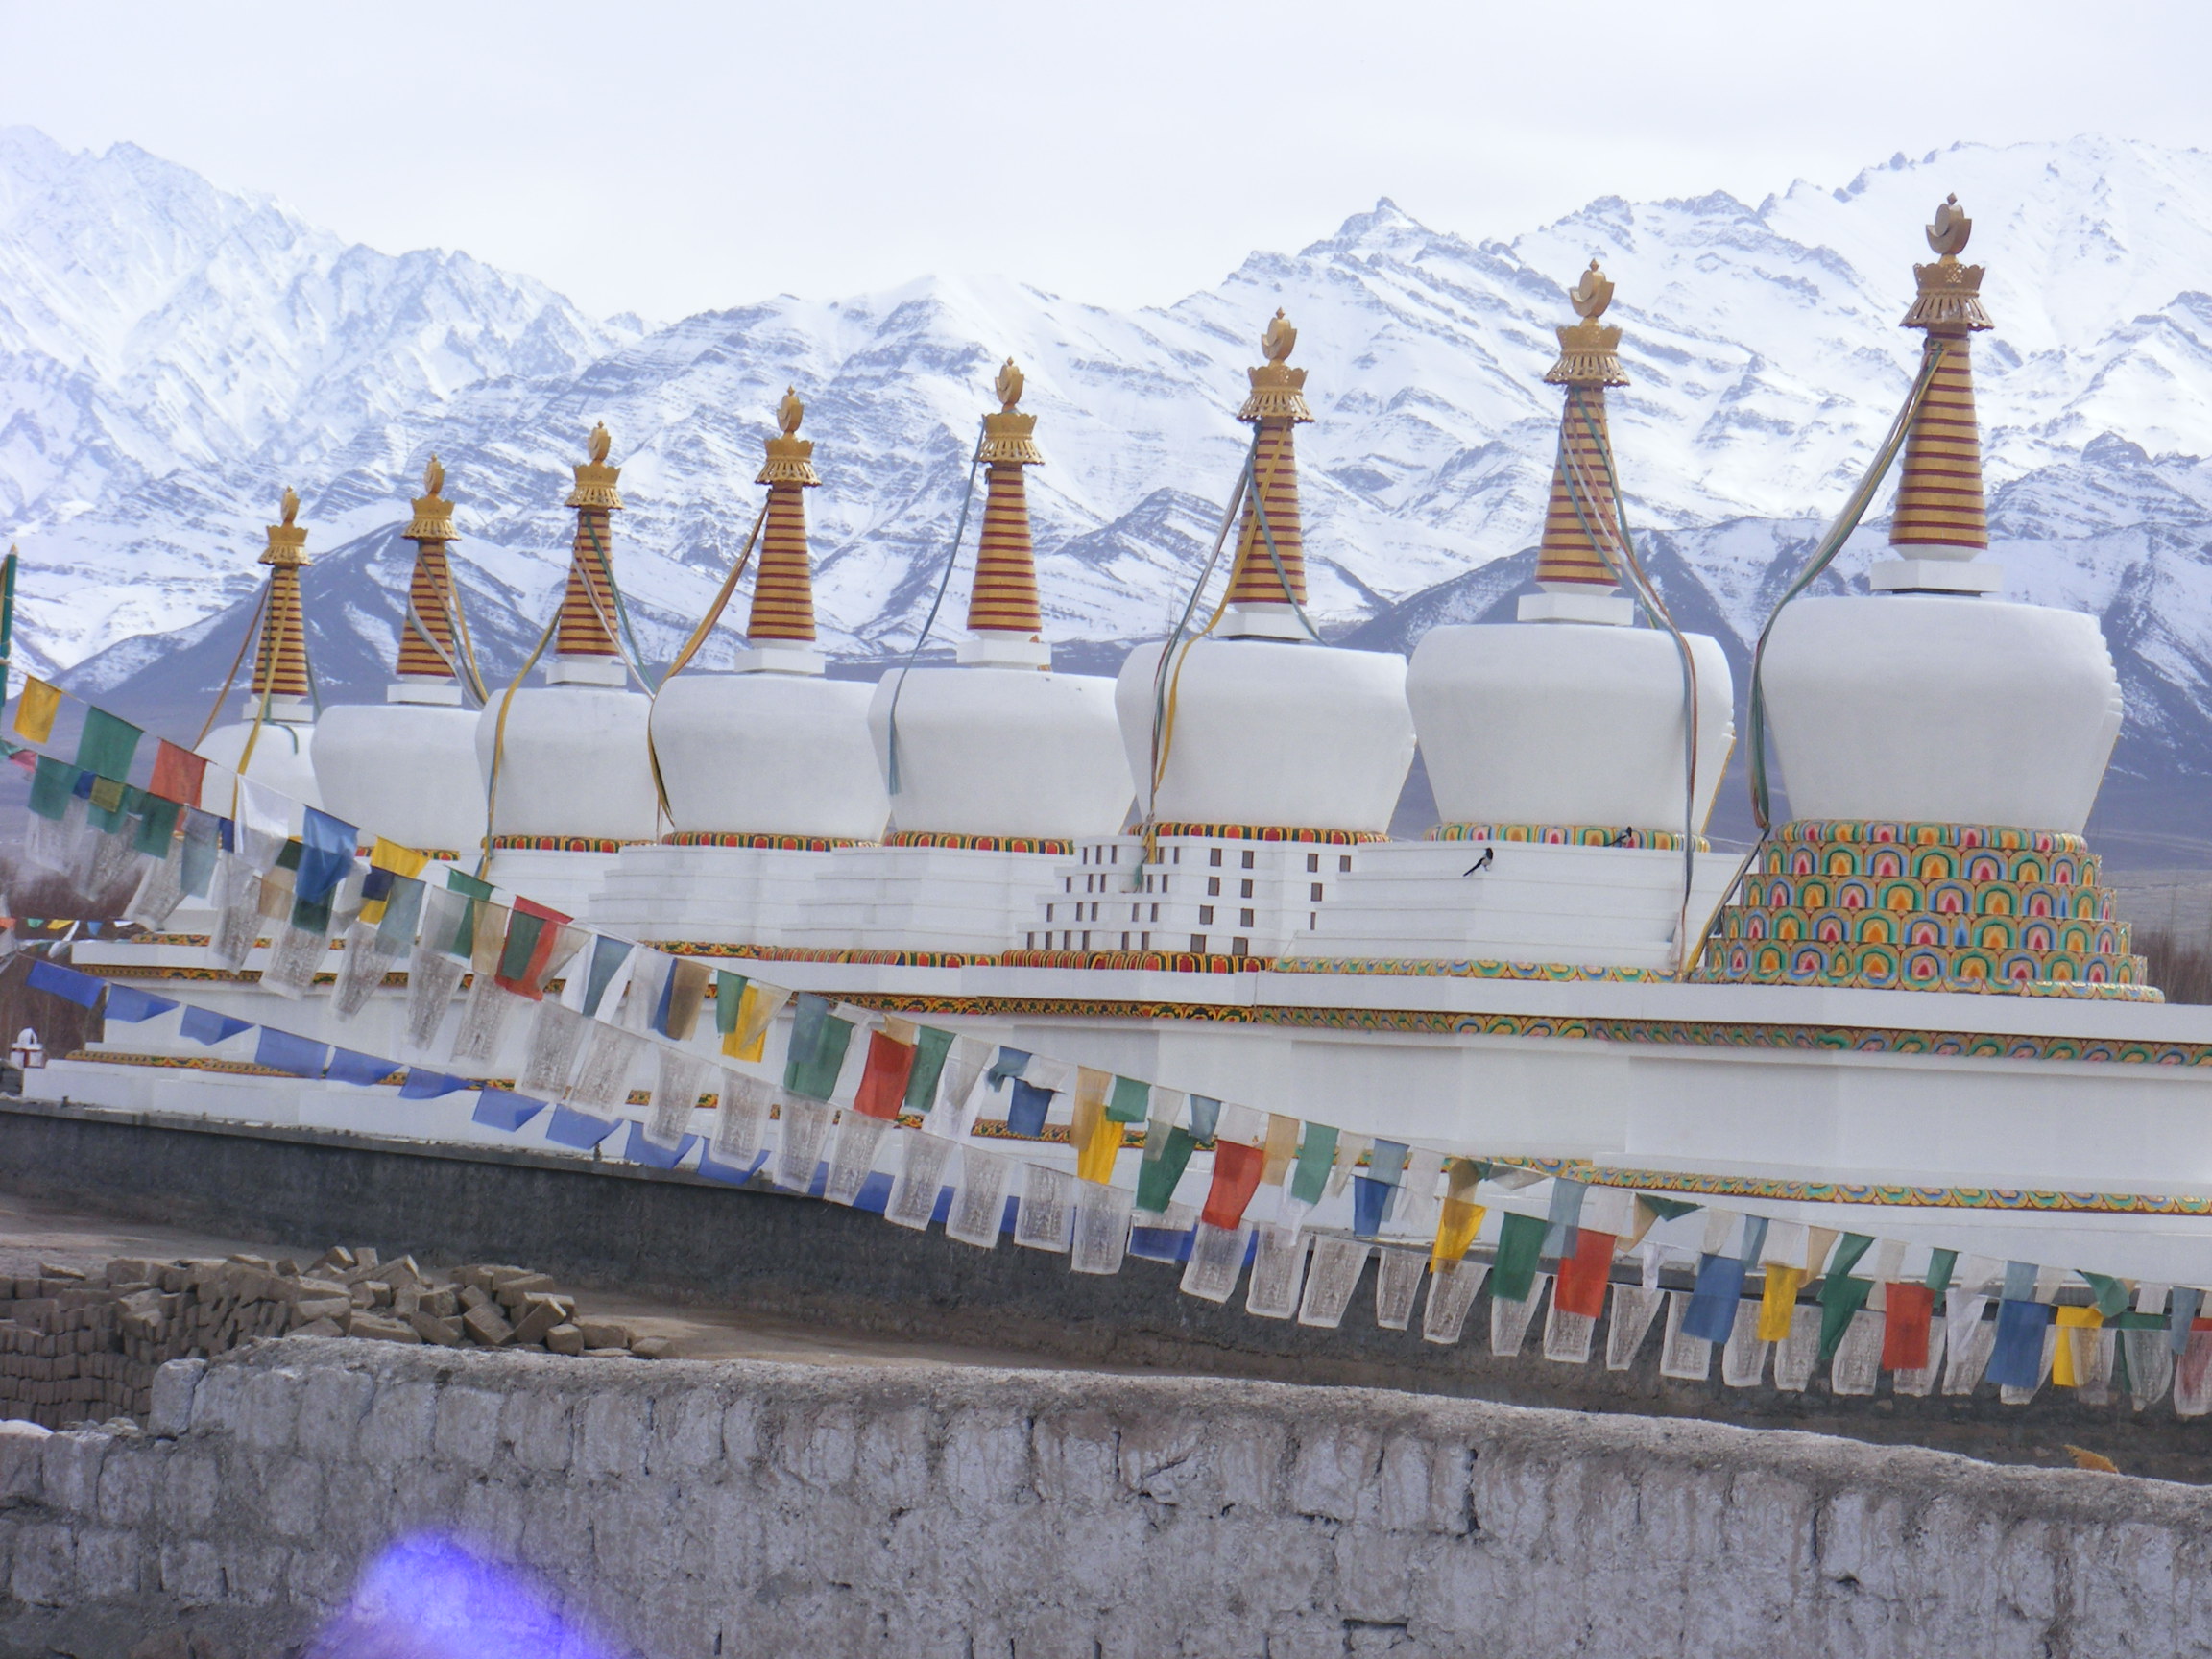 Ladakh, also known as 